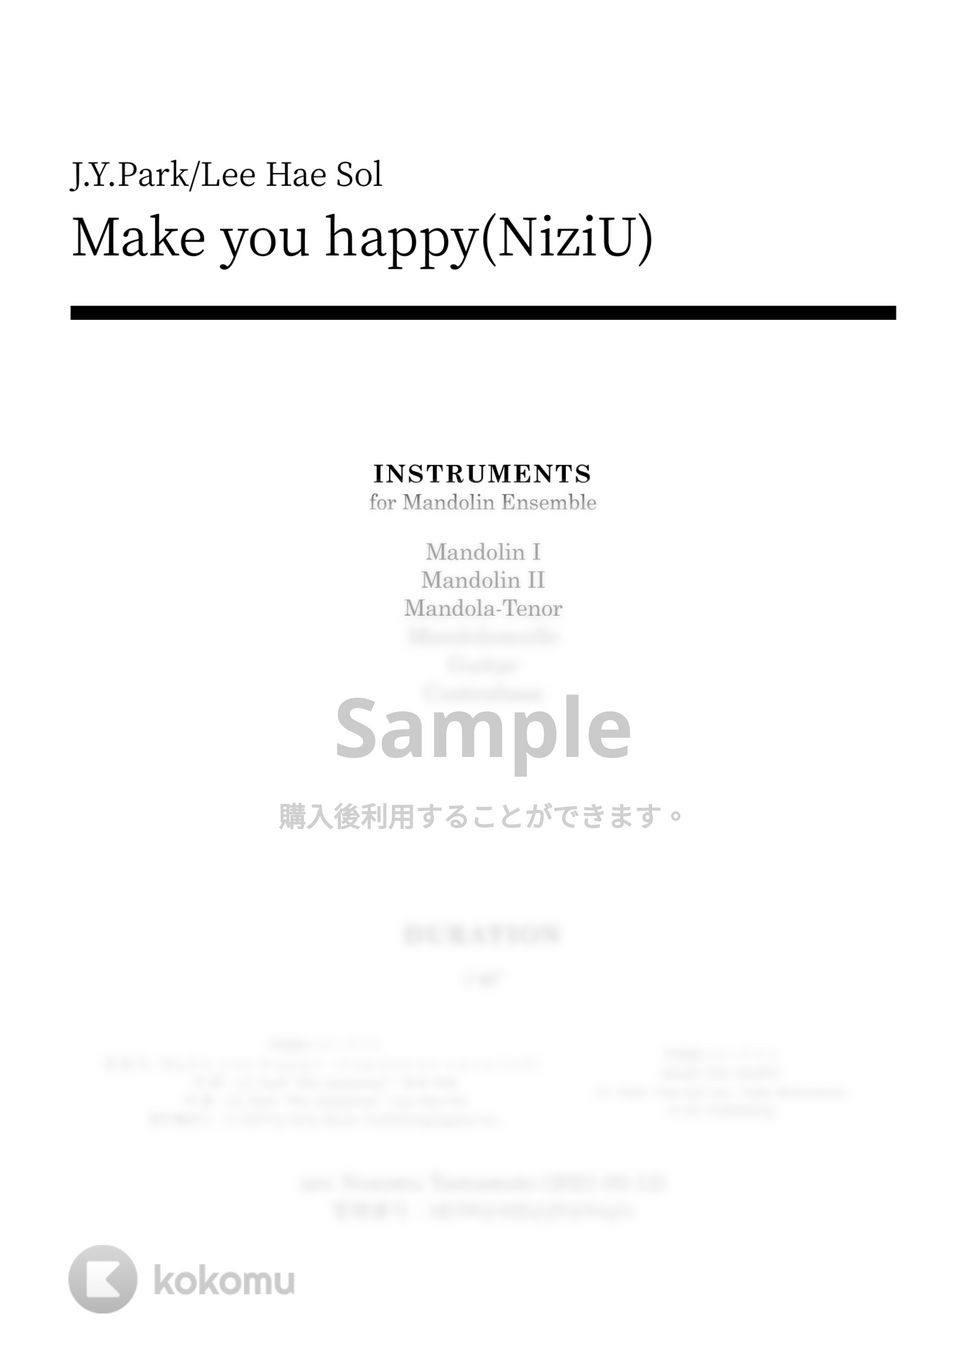 NiziU - Make you happy by MOW